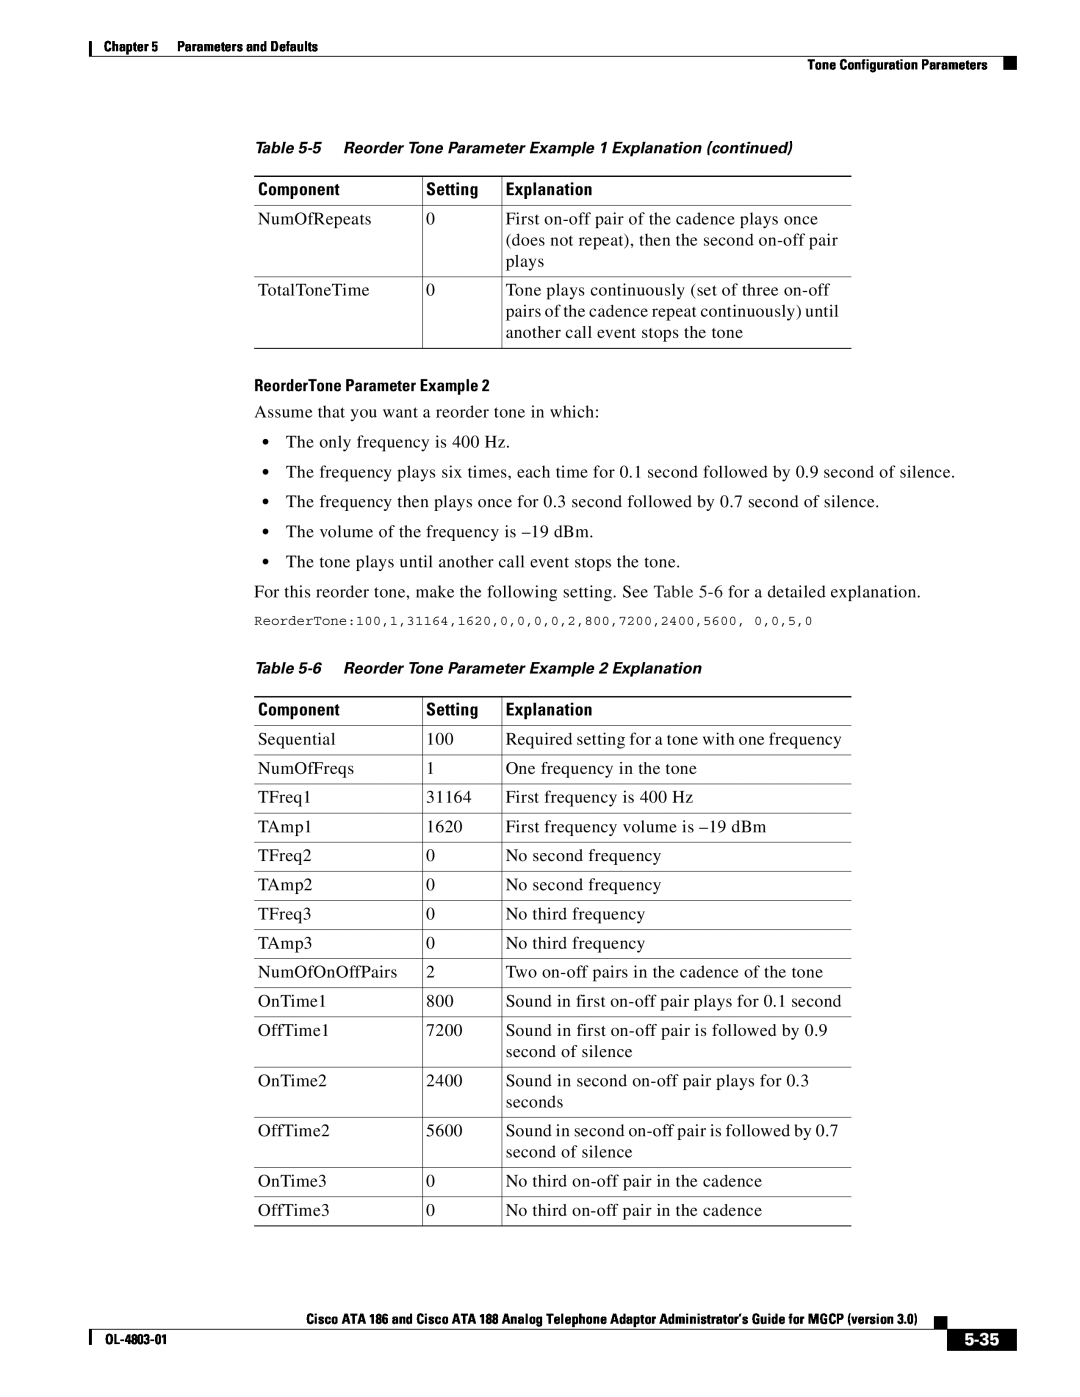 Cisco Systems ATA 186 manual ReorderTone Parameter Example, 5-35, Component, Setting, Explanation 